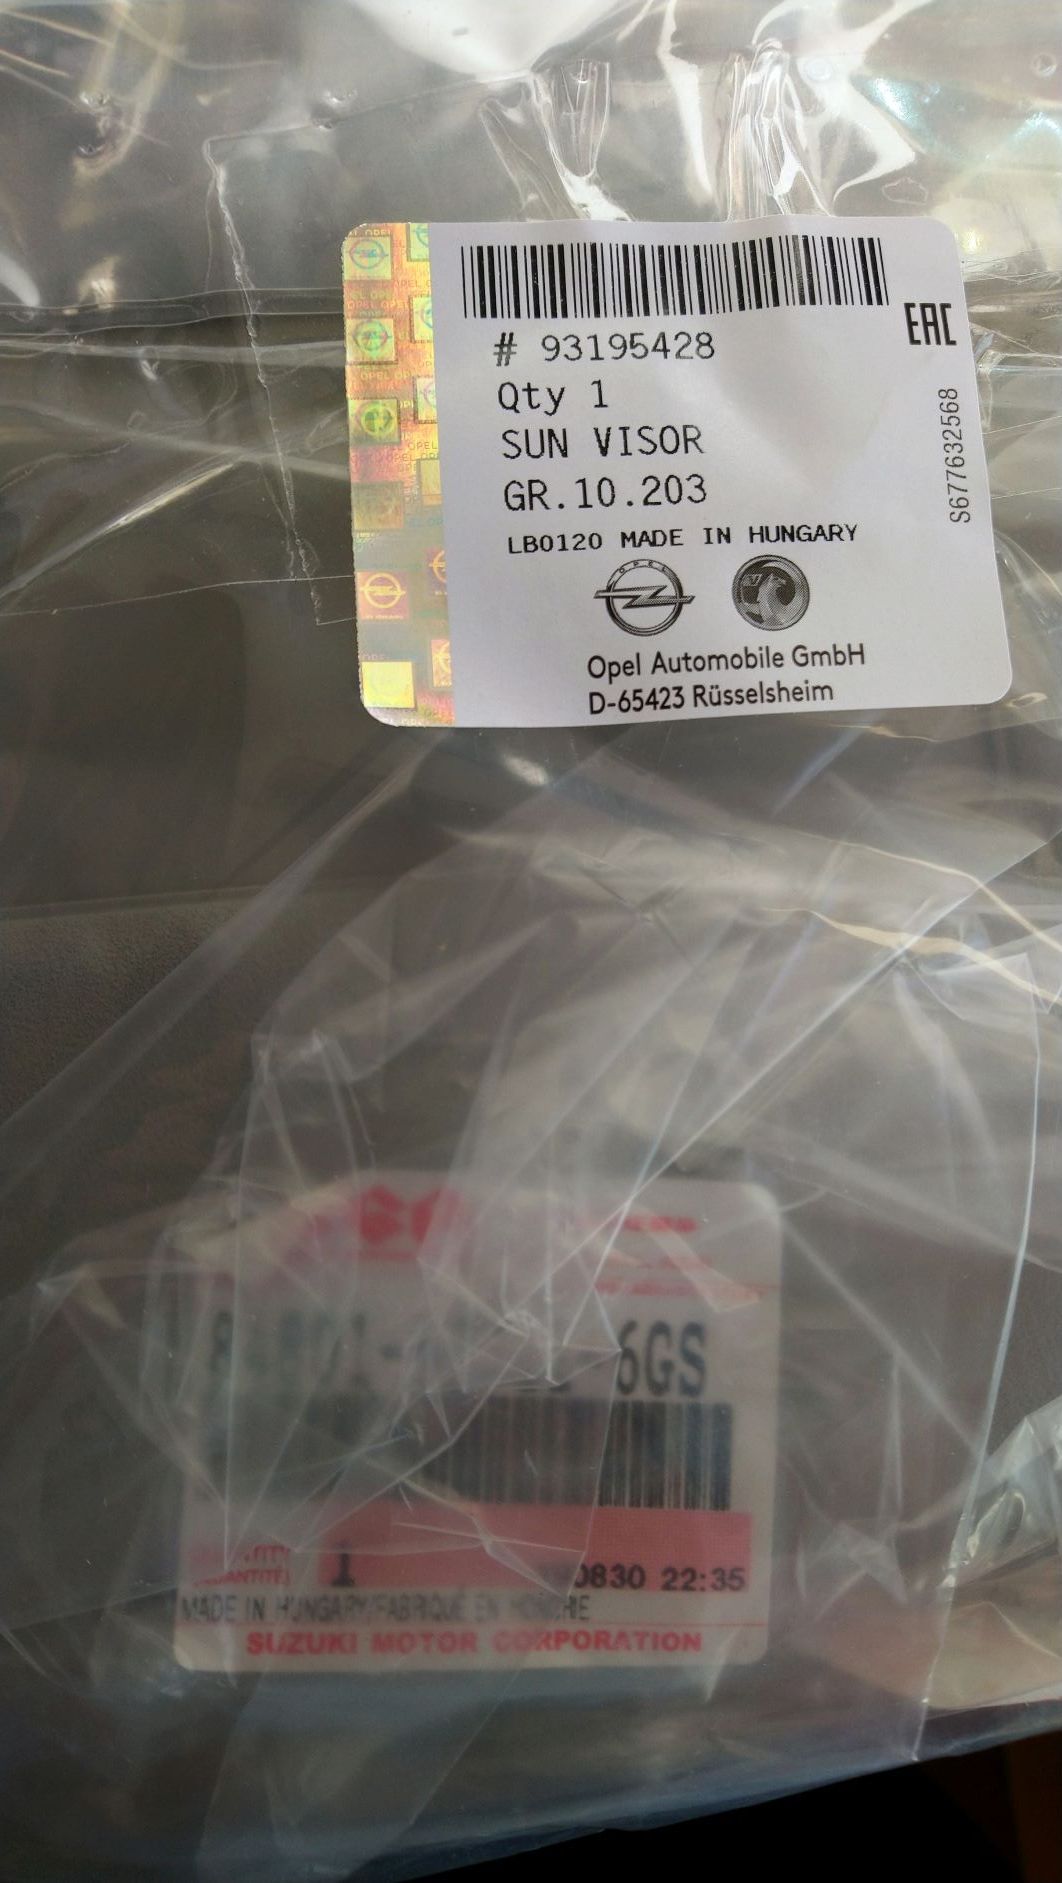 Suzuki branded sun visor in Vauxhall branded packaging